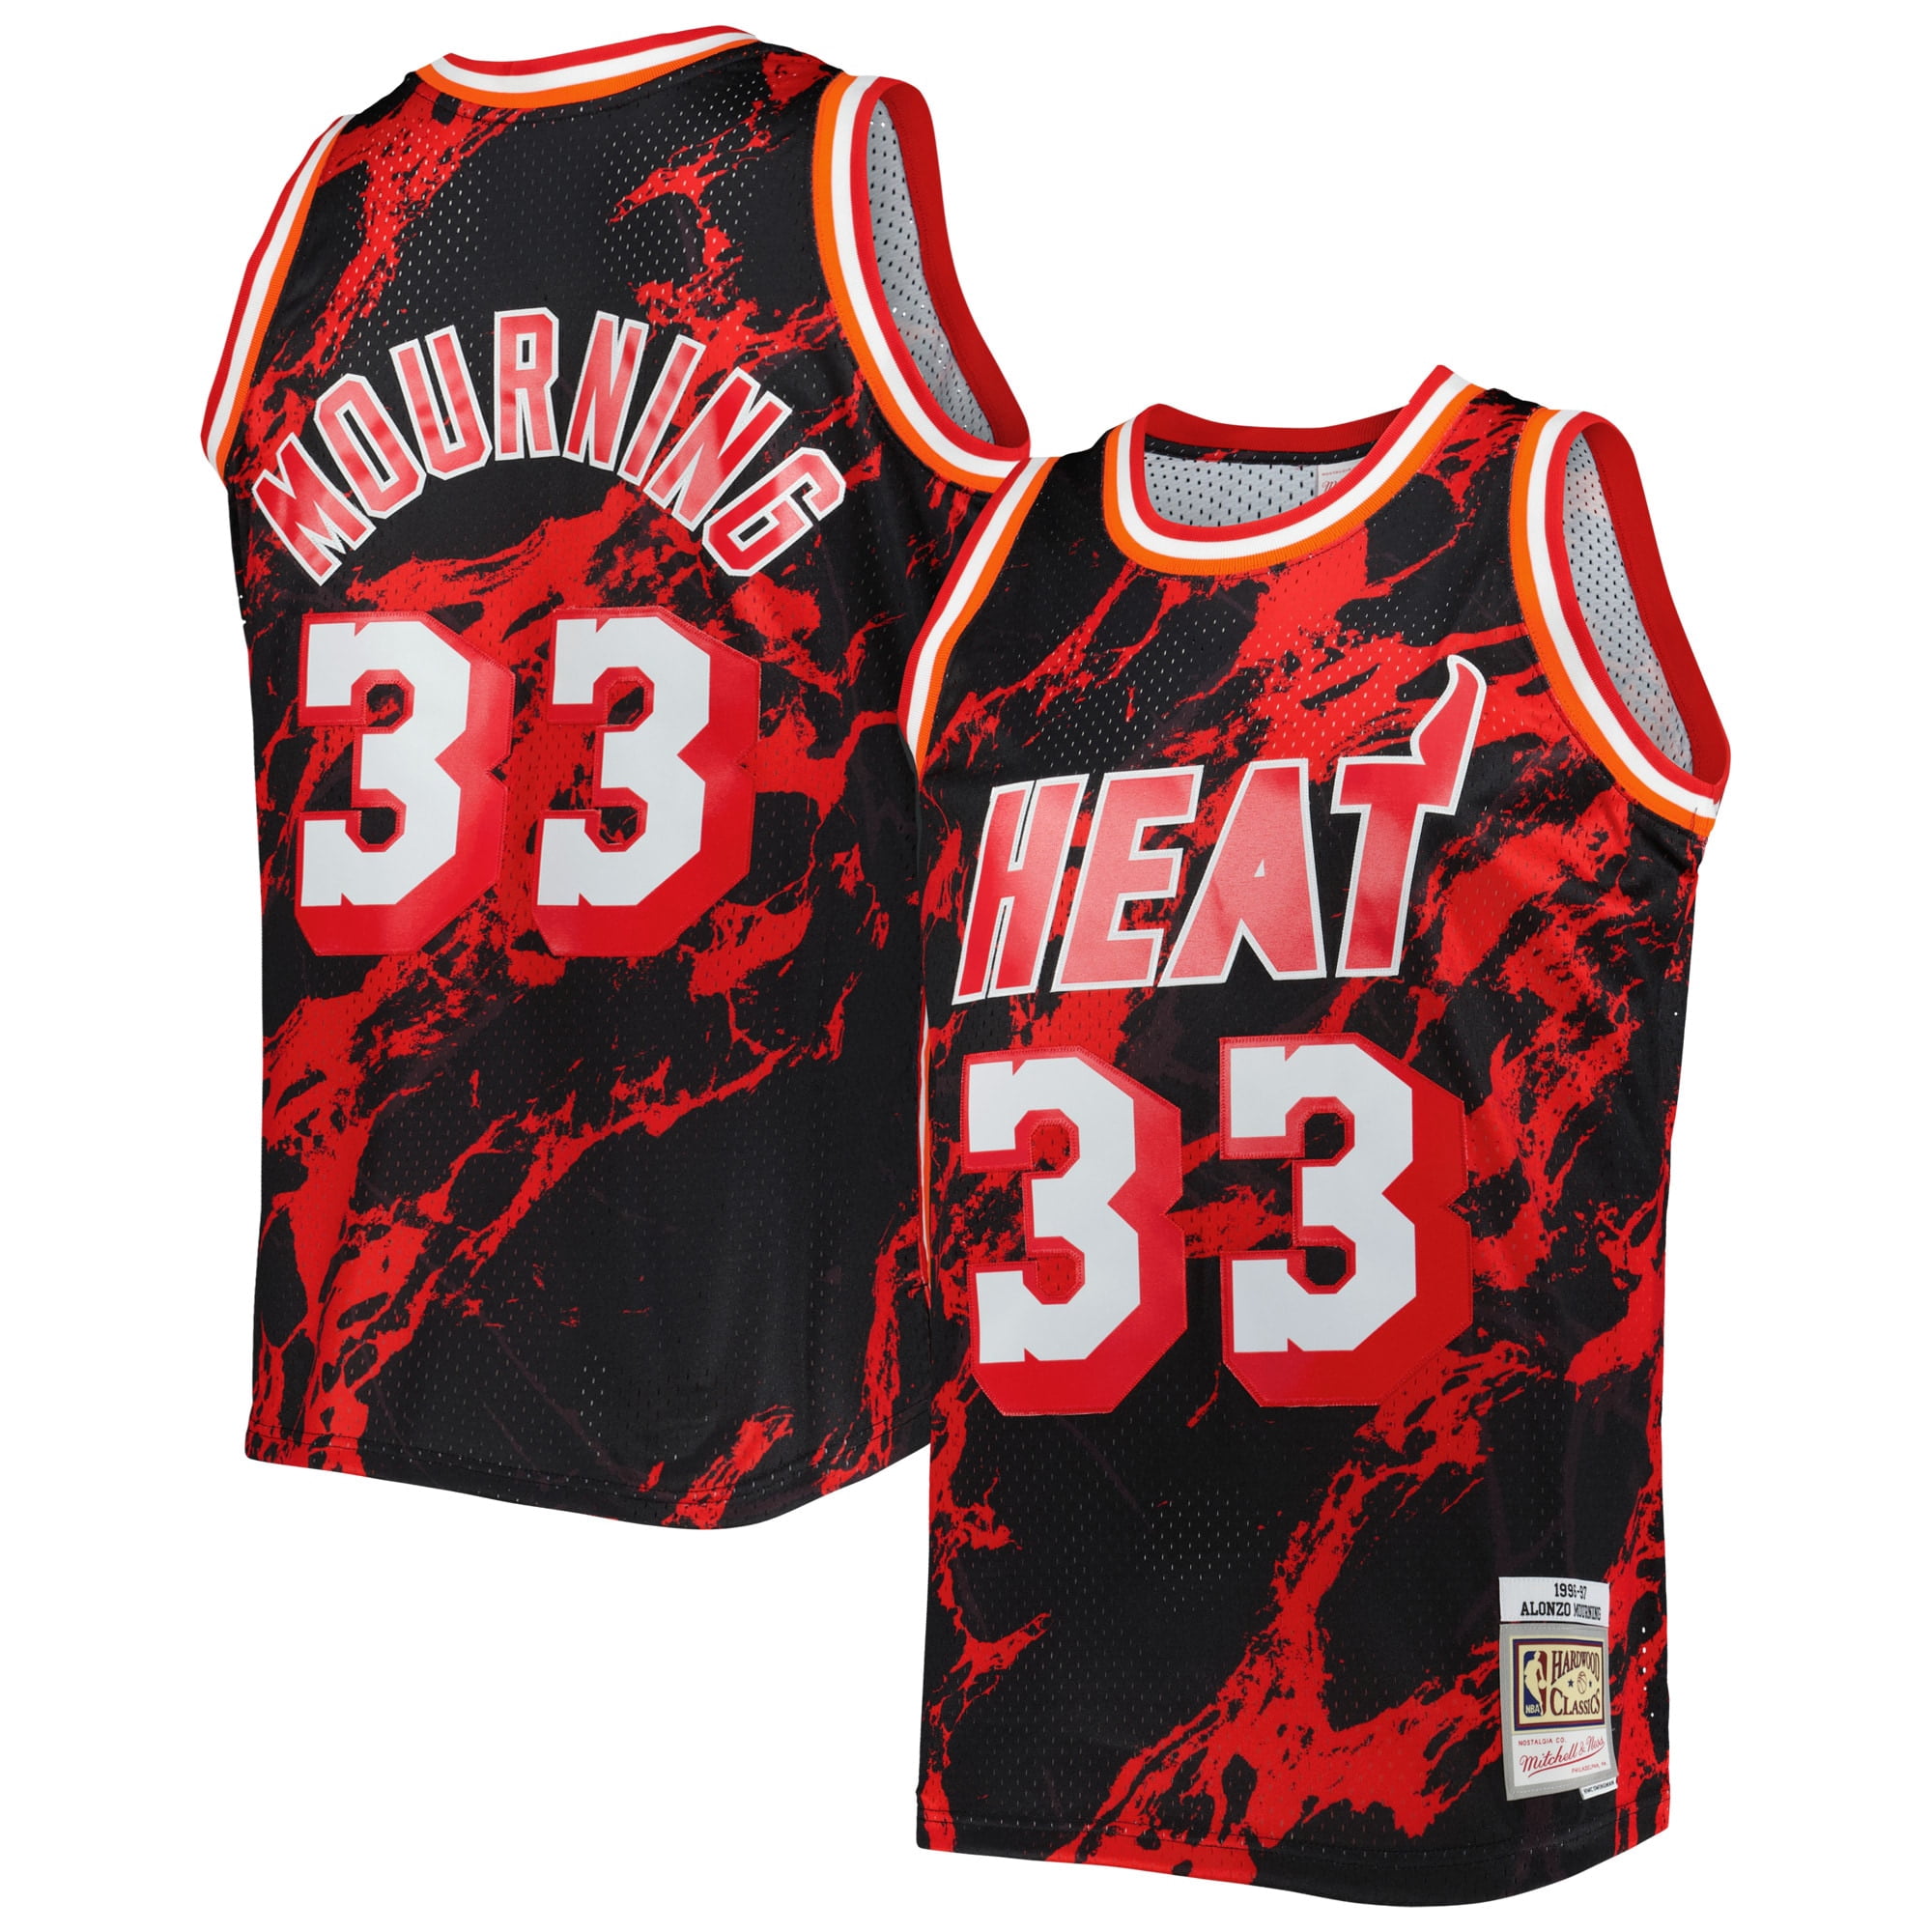 Shop Mitchell & Ness Miami Heat 96-97 Alonzo Mourning NBA Swingman Jersey  SMJYAC18093-MHEBLCK96AMO black